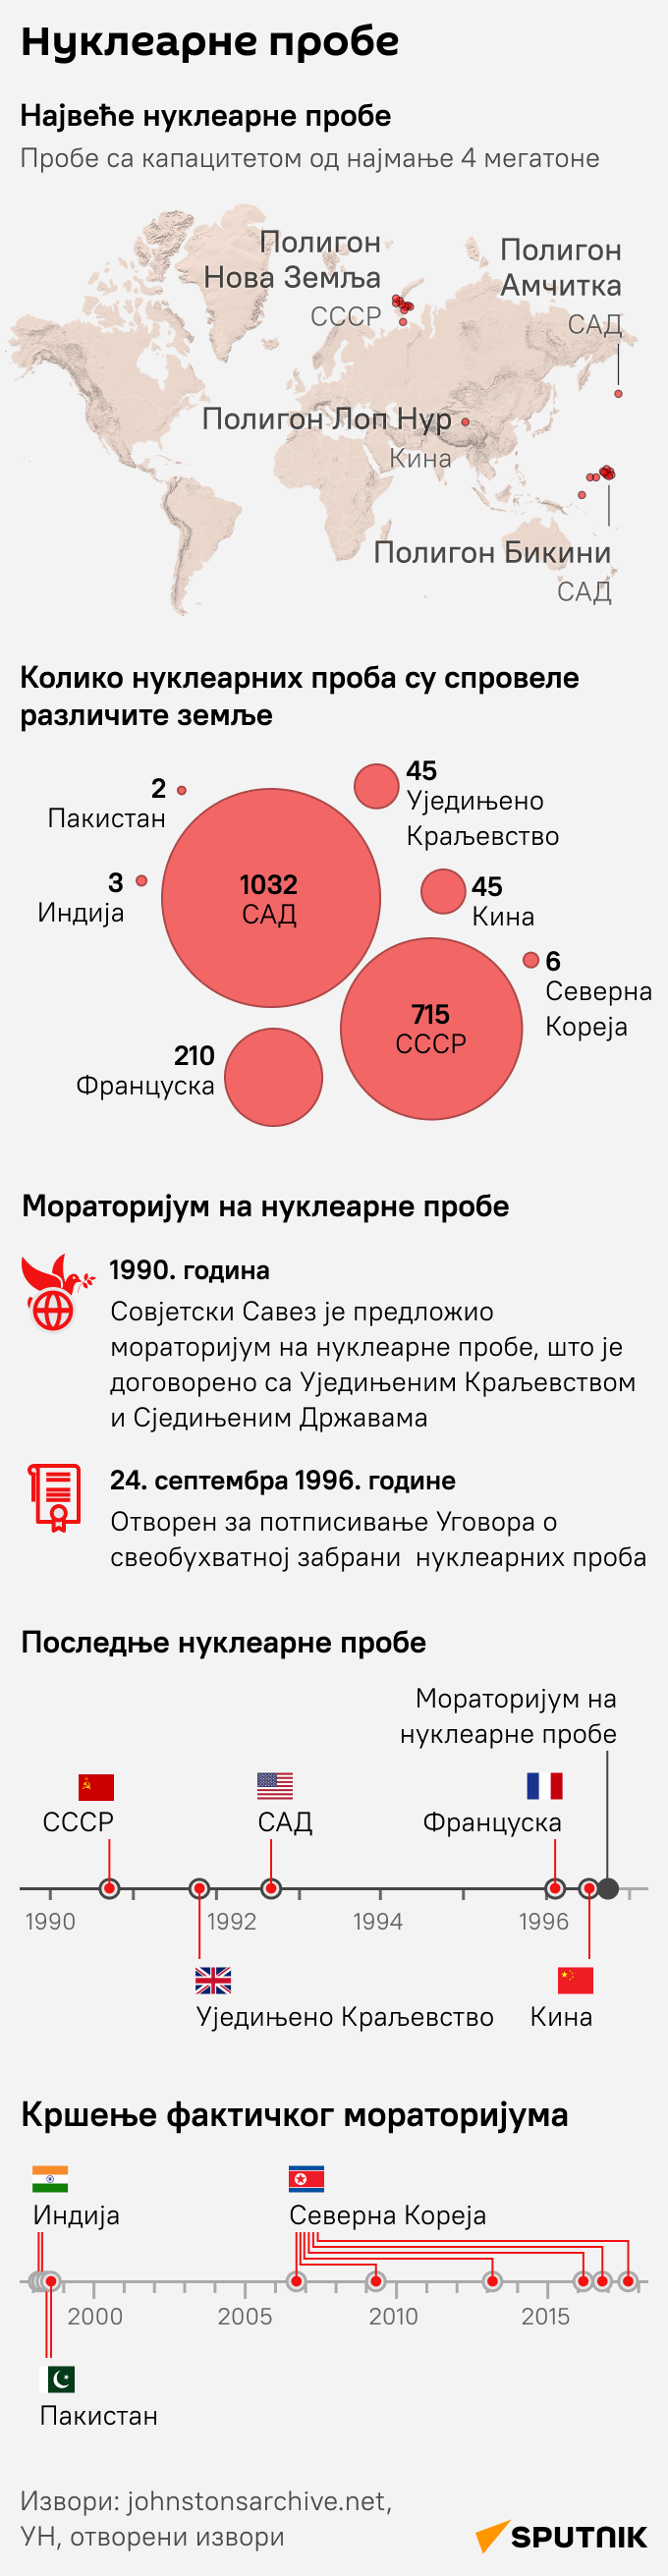 Инфографика нуклеарне пробе ЋИРИЛИЦА моб - Sputnik Србија